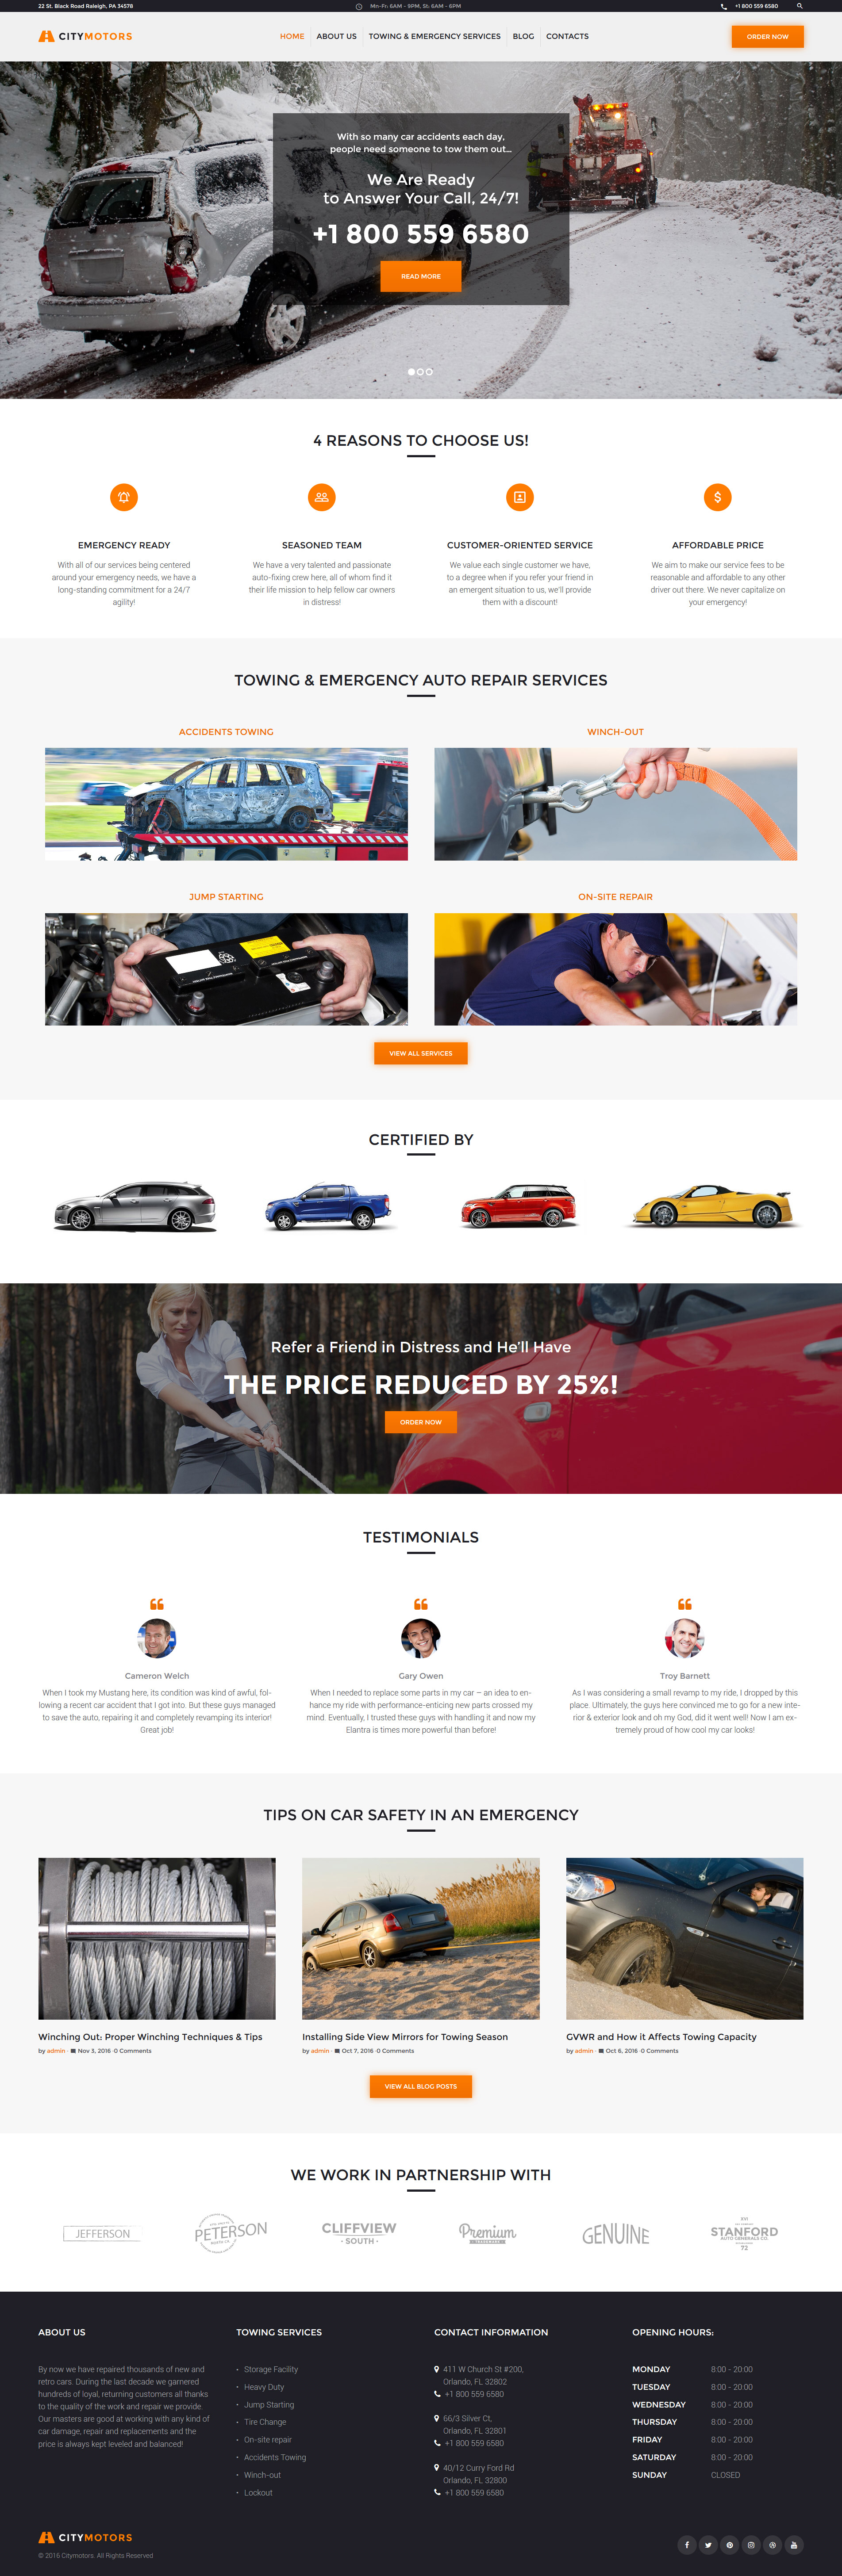 CityMotors - Auto Towing Company WordPress Theme